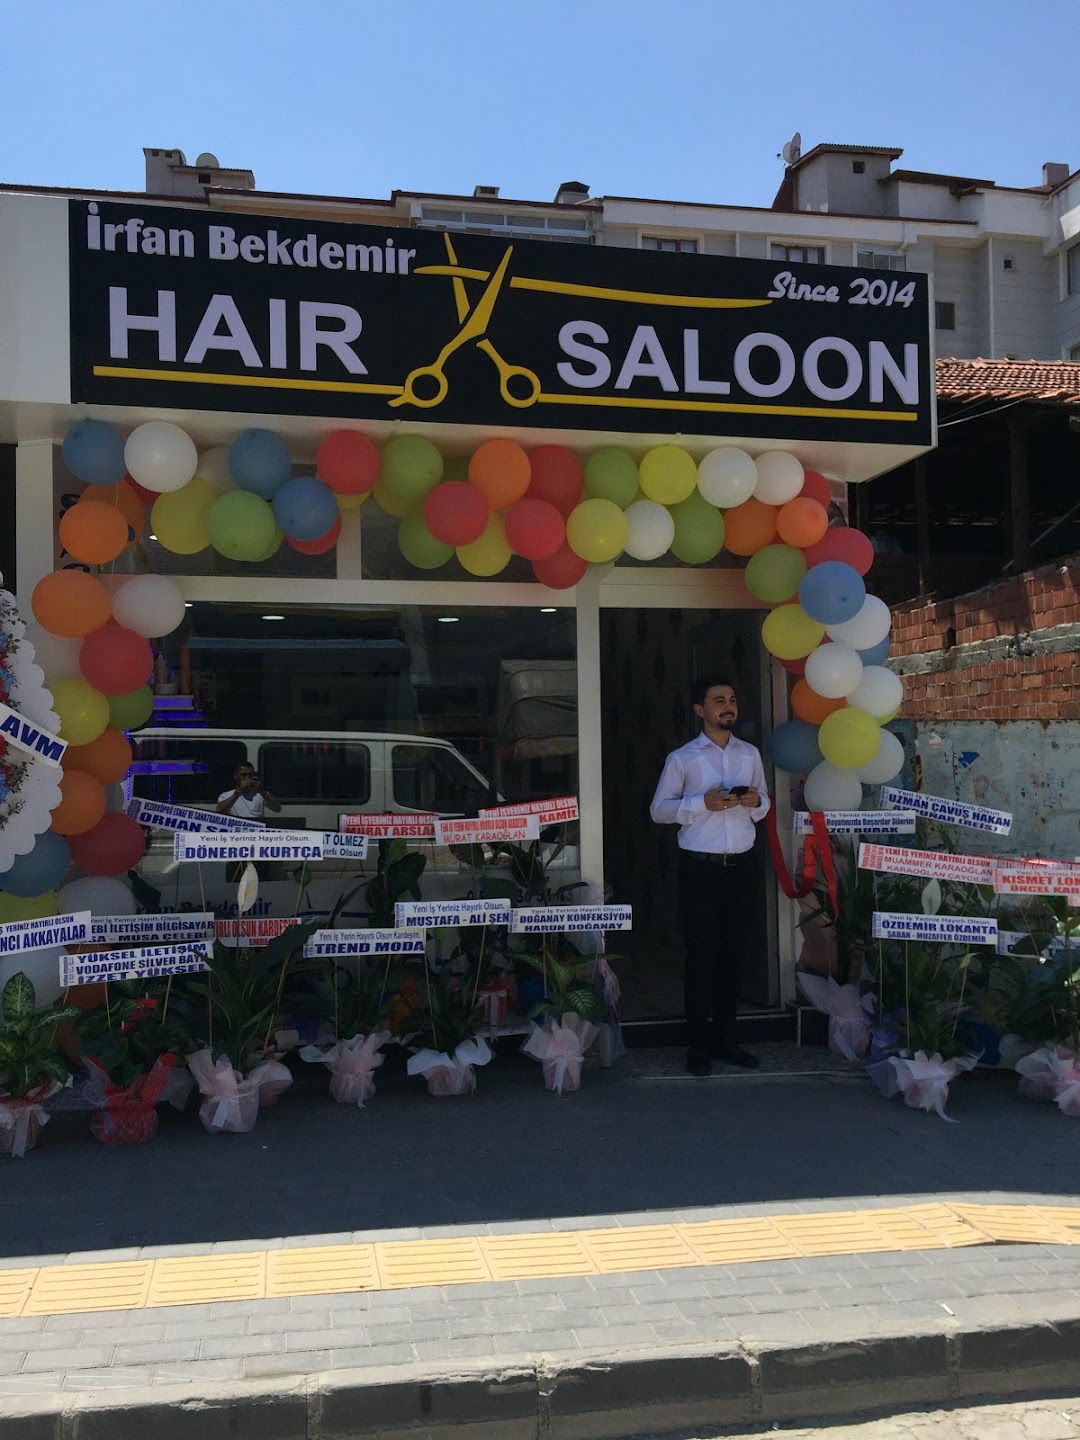 rfan Bekdemir Hair Saloon